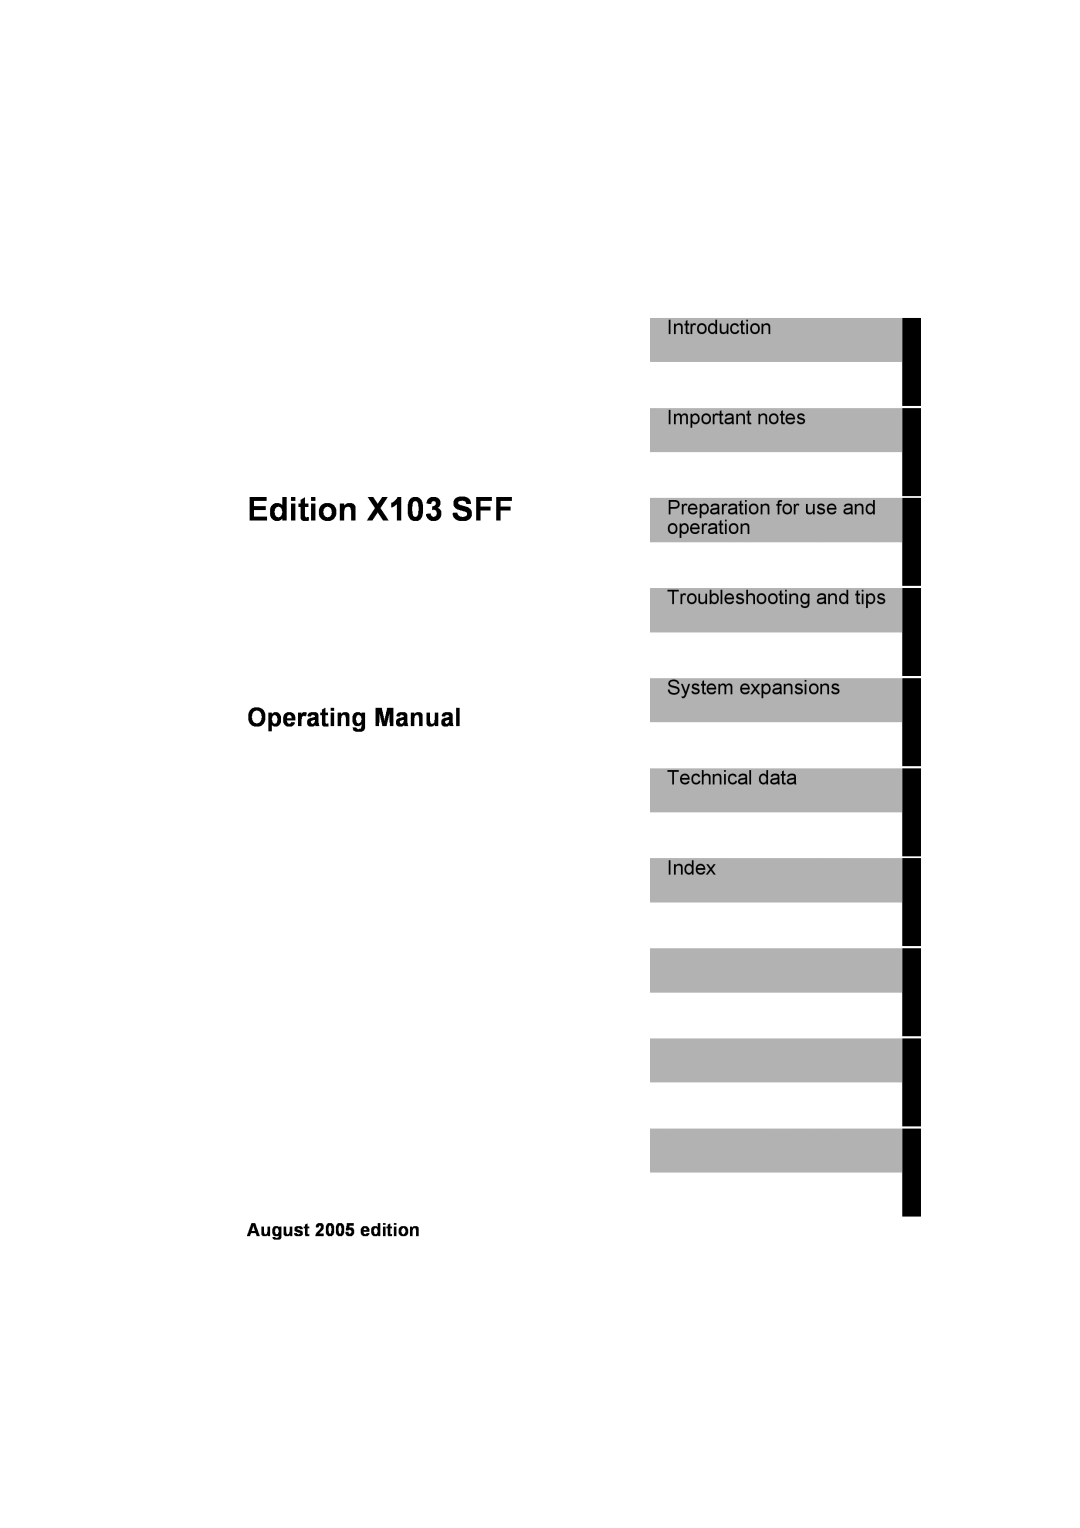 Fujitsu Siemens Computers manual Edition X103 SFF, Operating Manual, August 2005 edition 